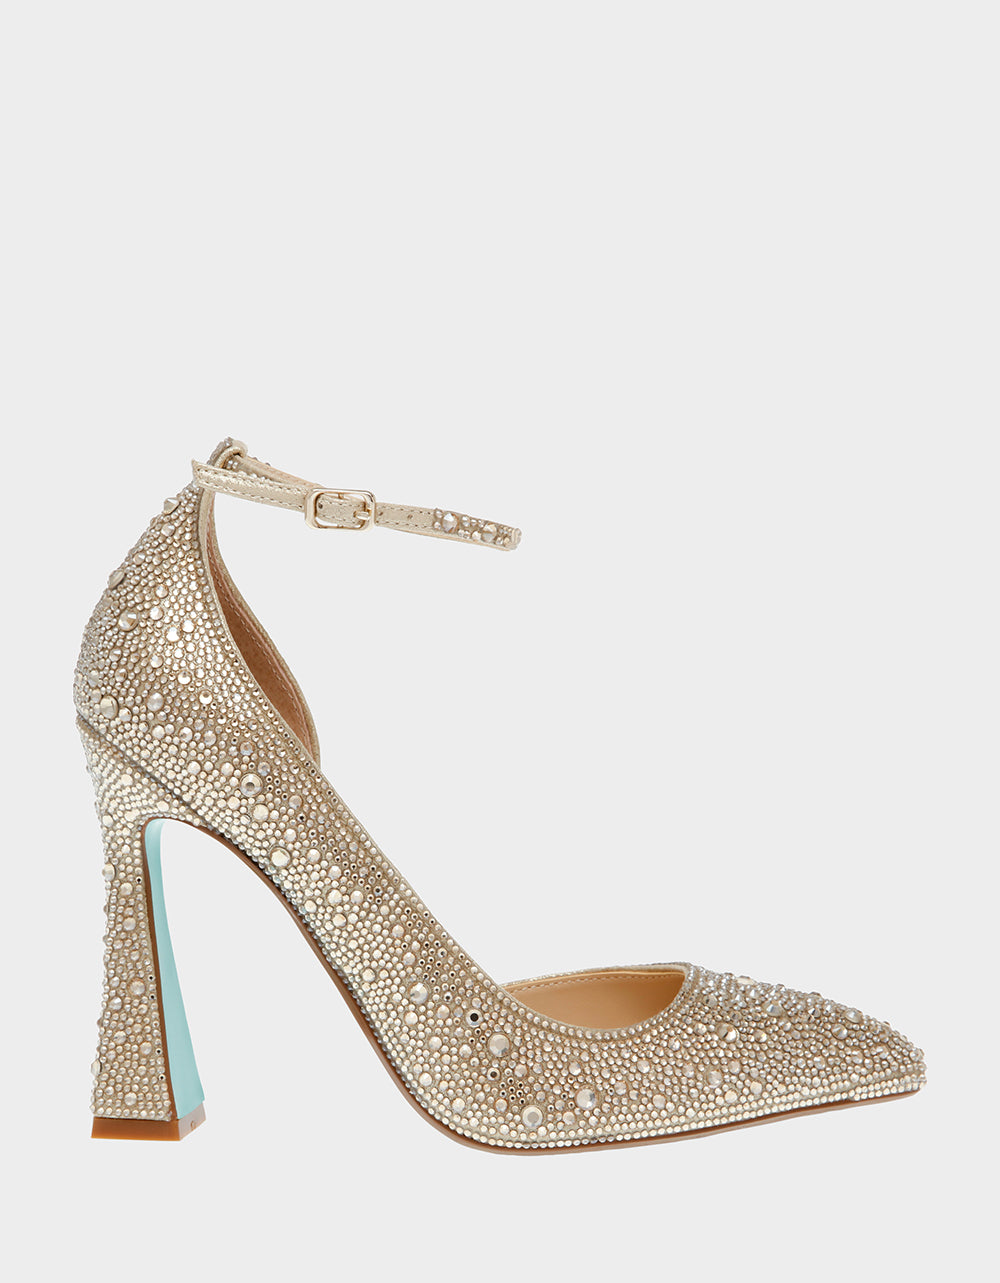 Gold Glitter High Heel Shoes Statuette | Zazzle | Glitter high heels,  Sparkly wedding shoes, Wedding shoes